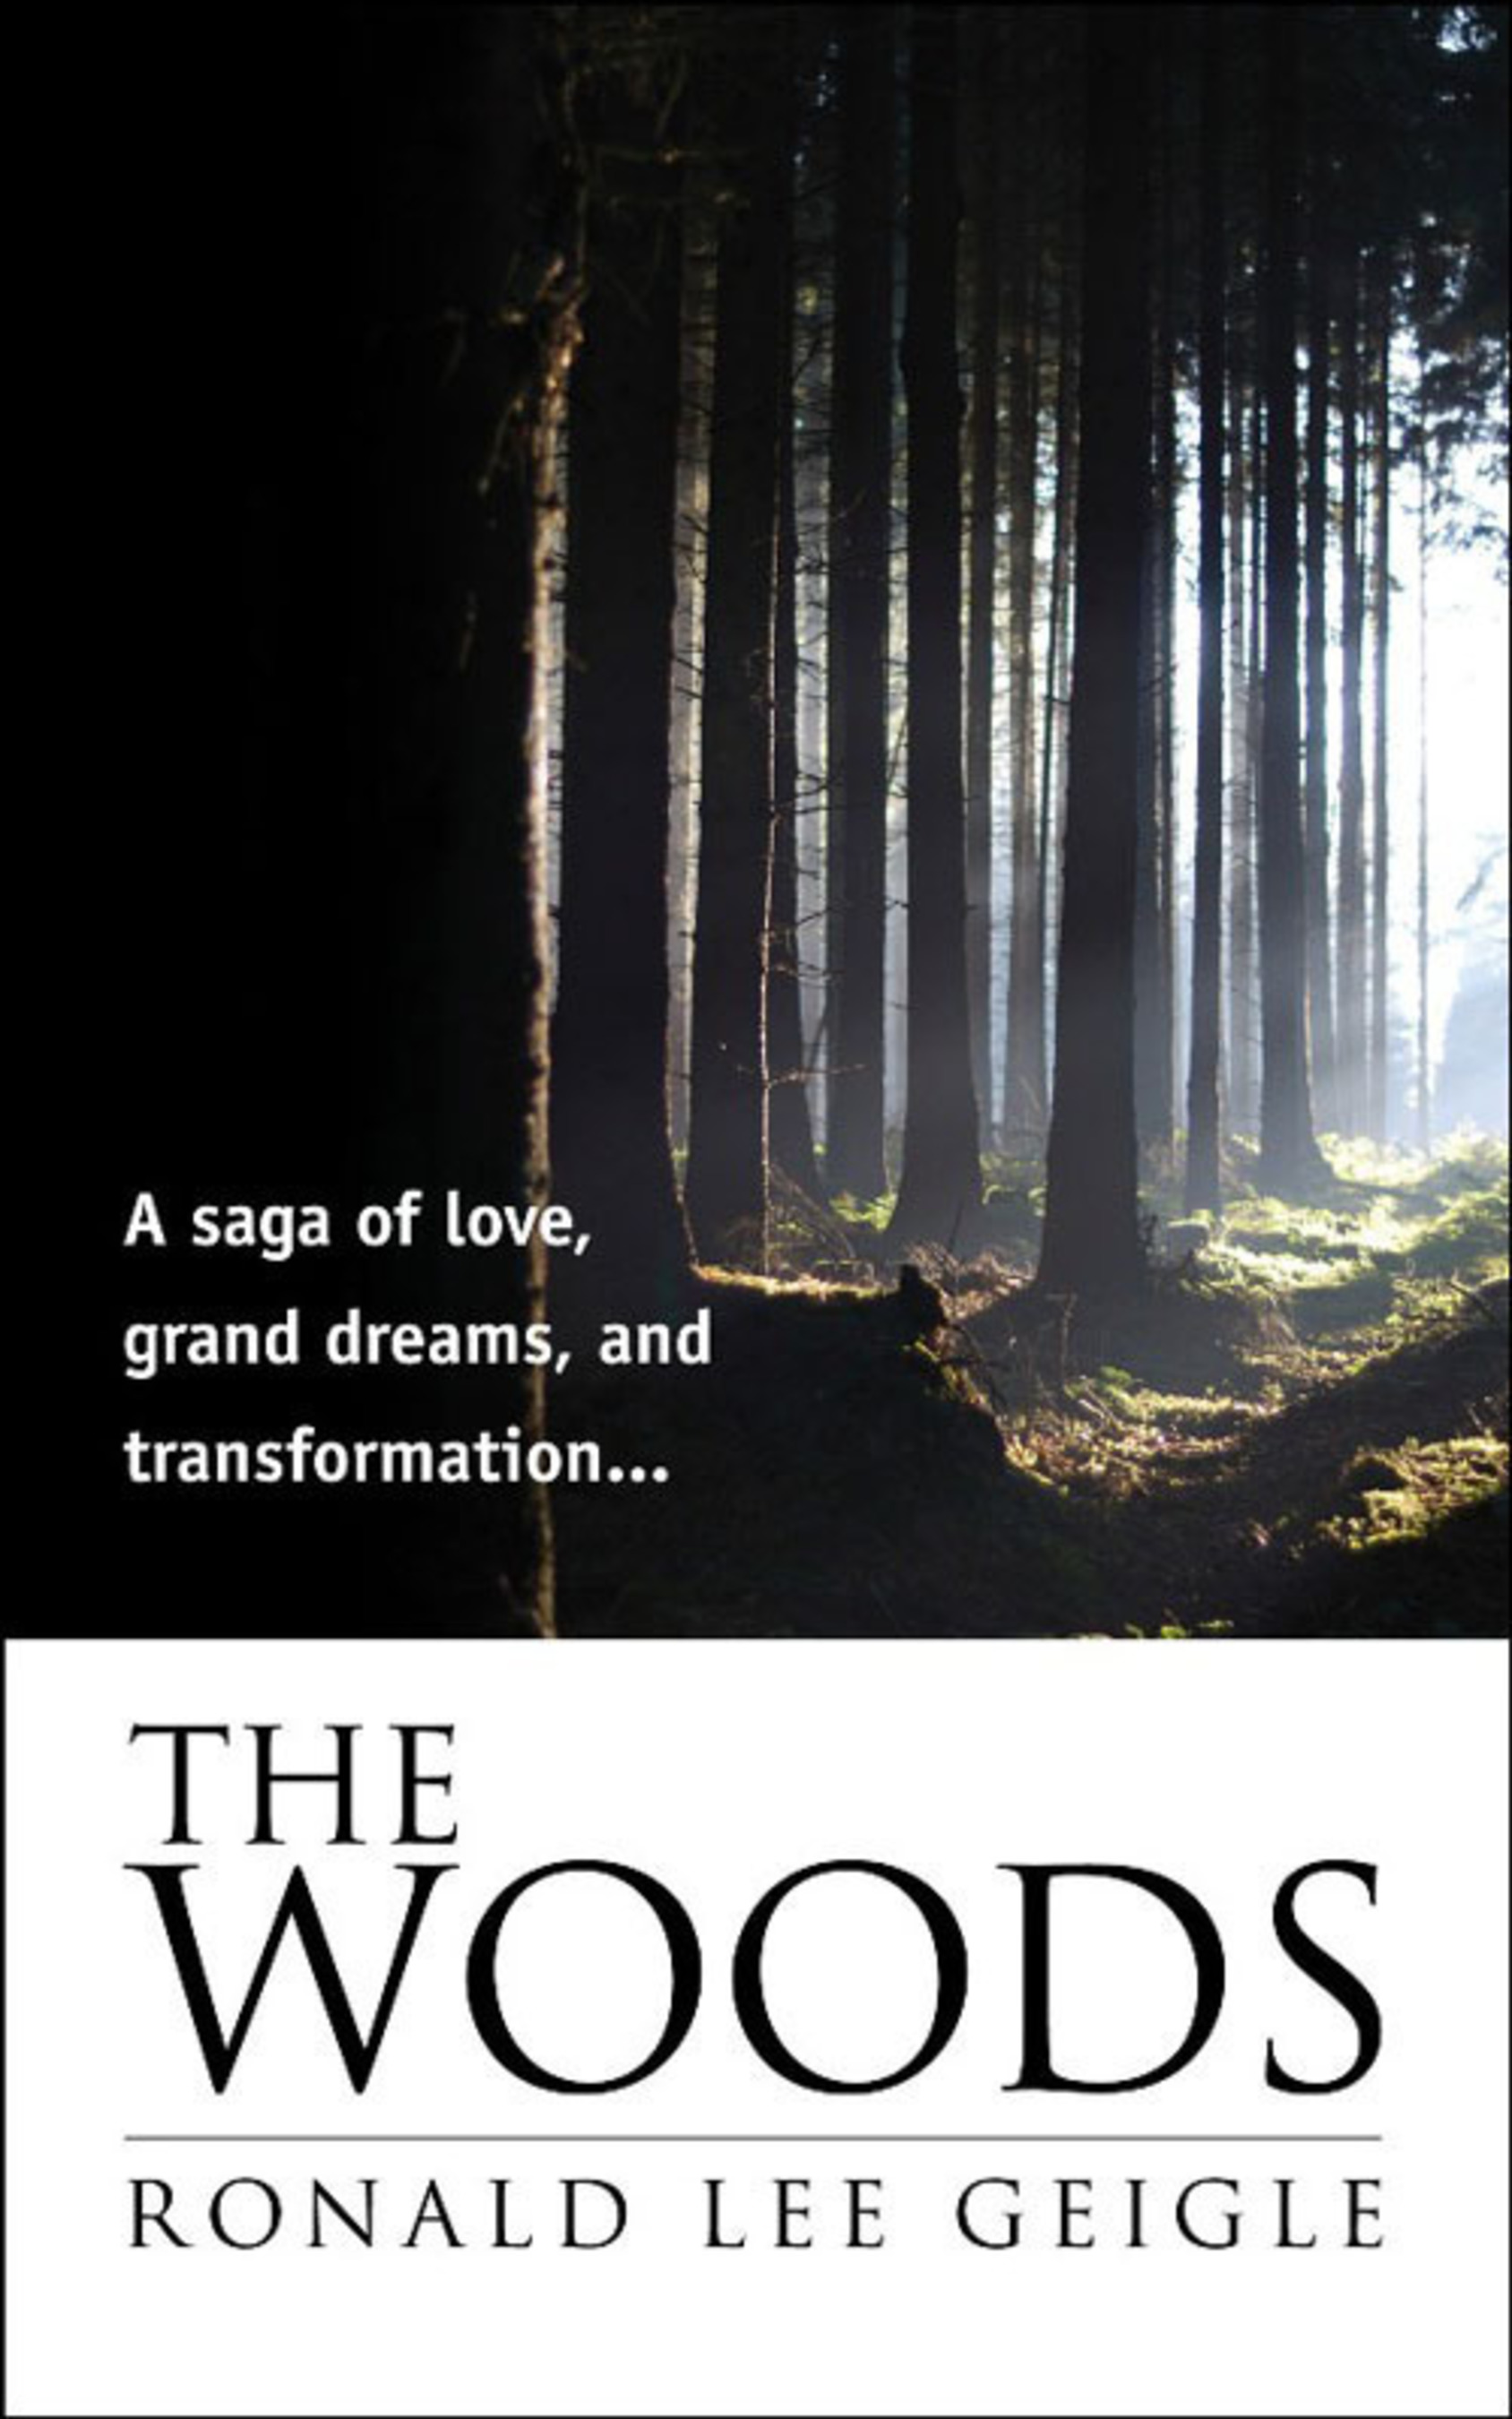 The Woods, by Ronald Lee Geigle. (PRNewsFoto/WordVirgin) (PRNewsFoto/WORDVIRGIN)